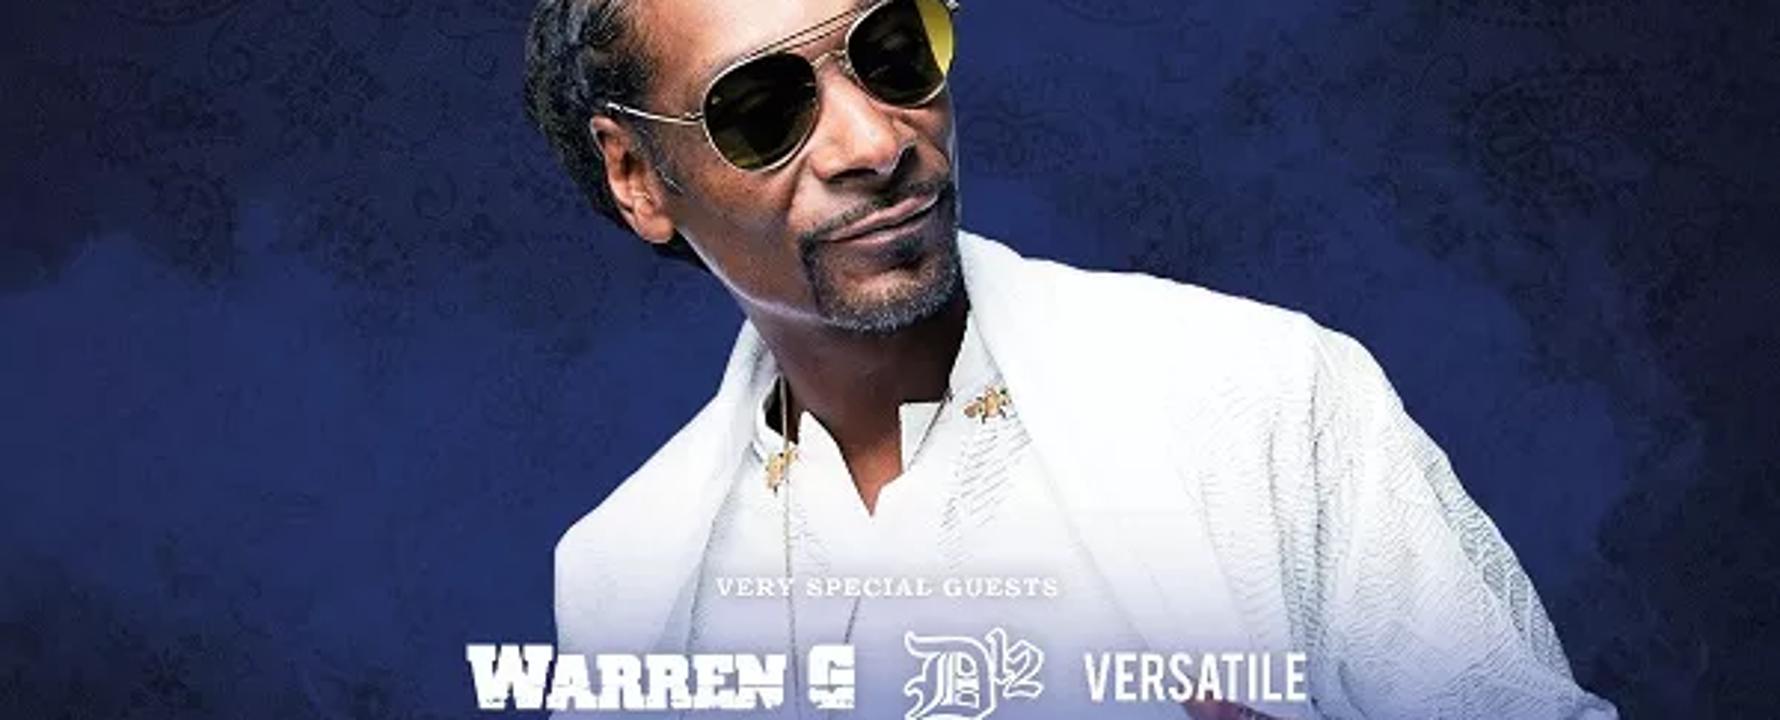 Tickets for Snoop Dogg in Birmingham Wegow